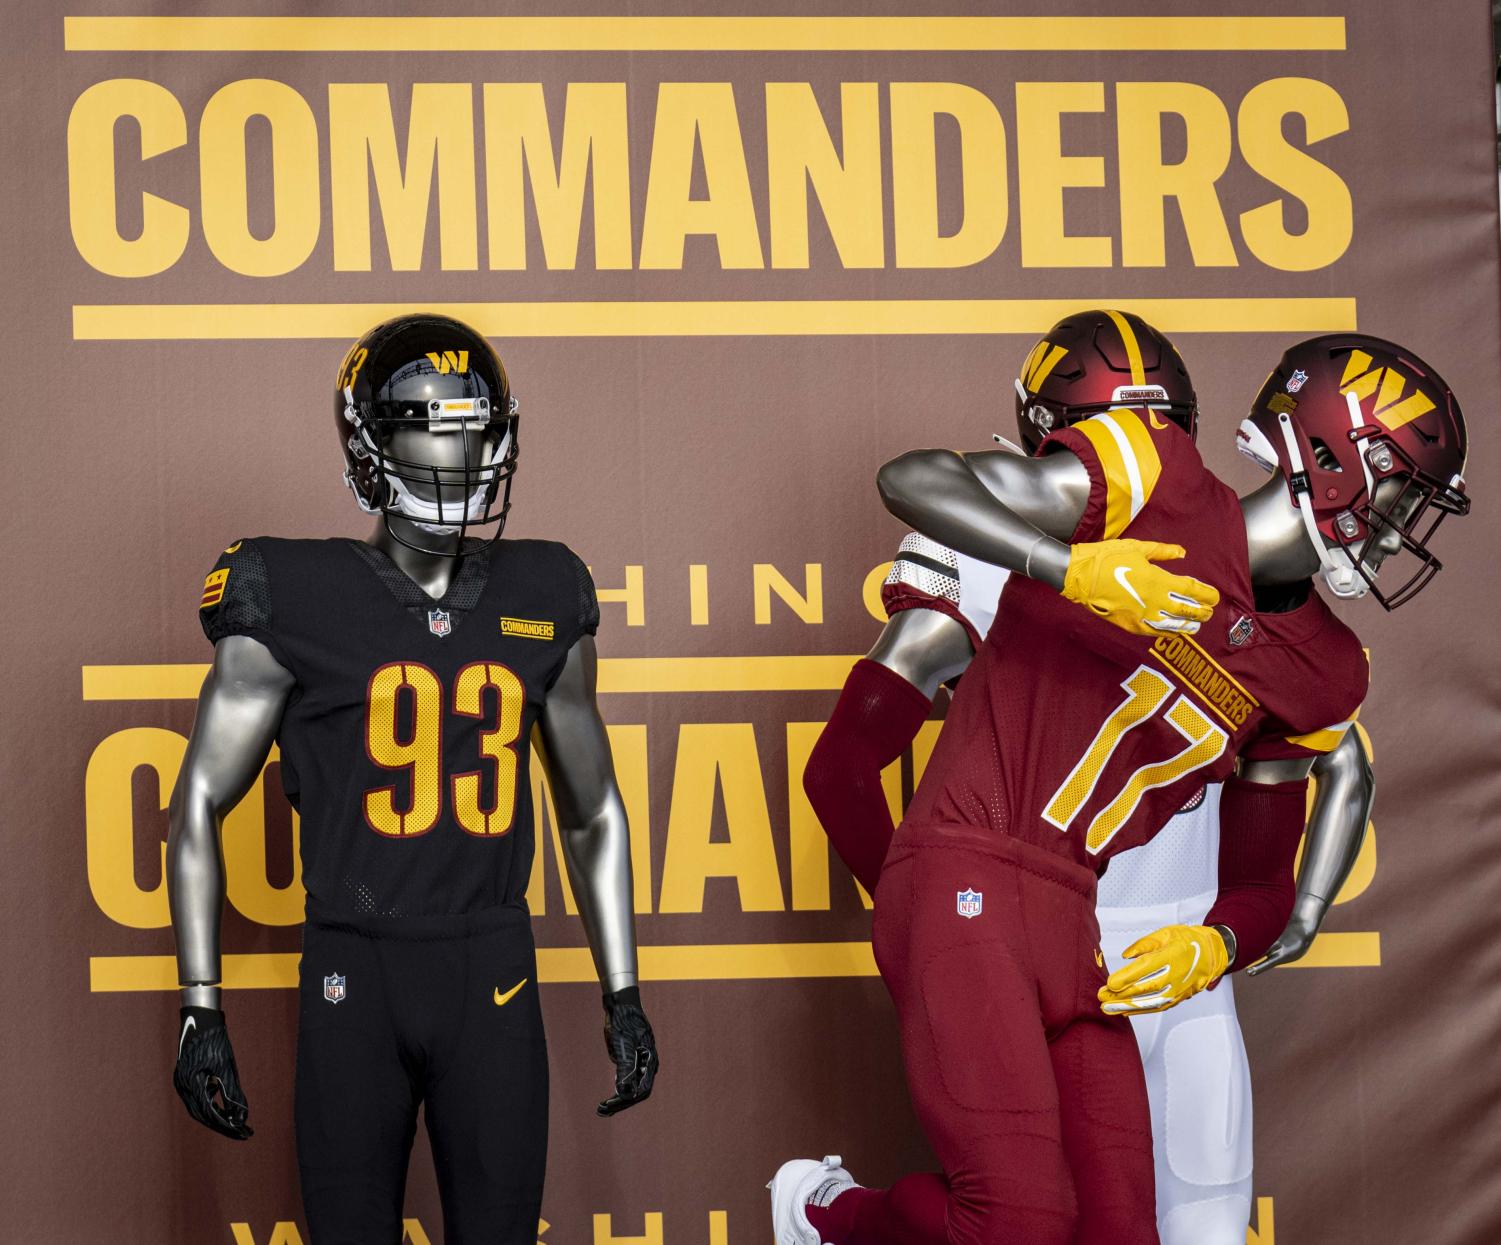 washington commanders football jerseys